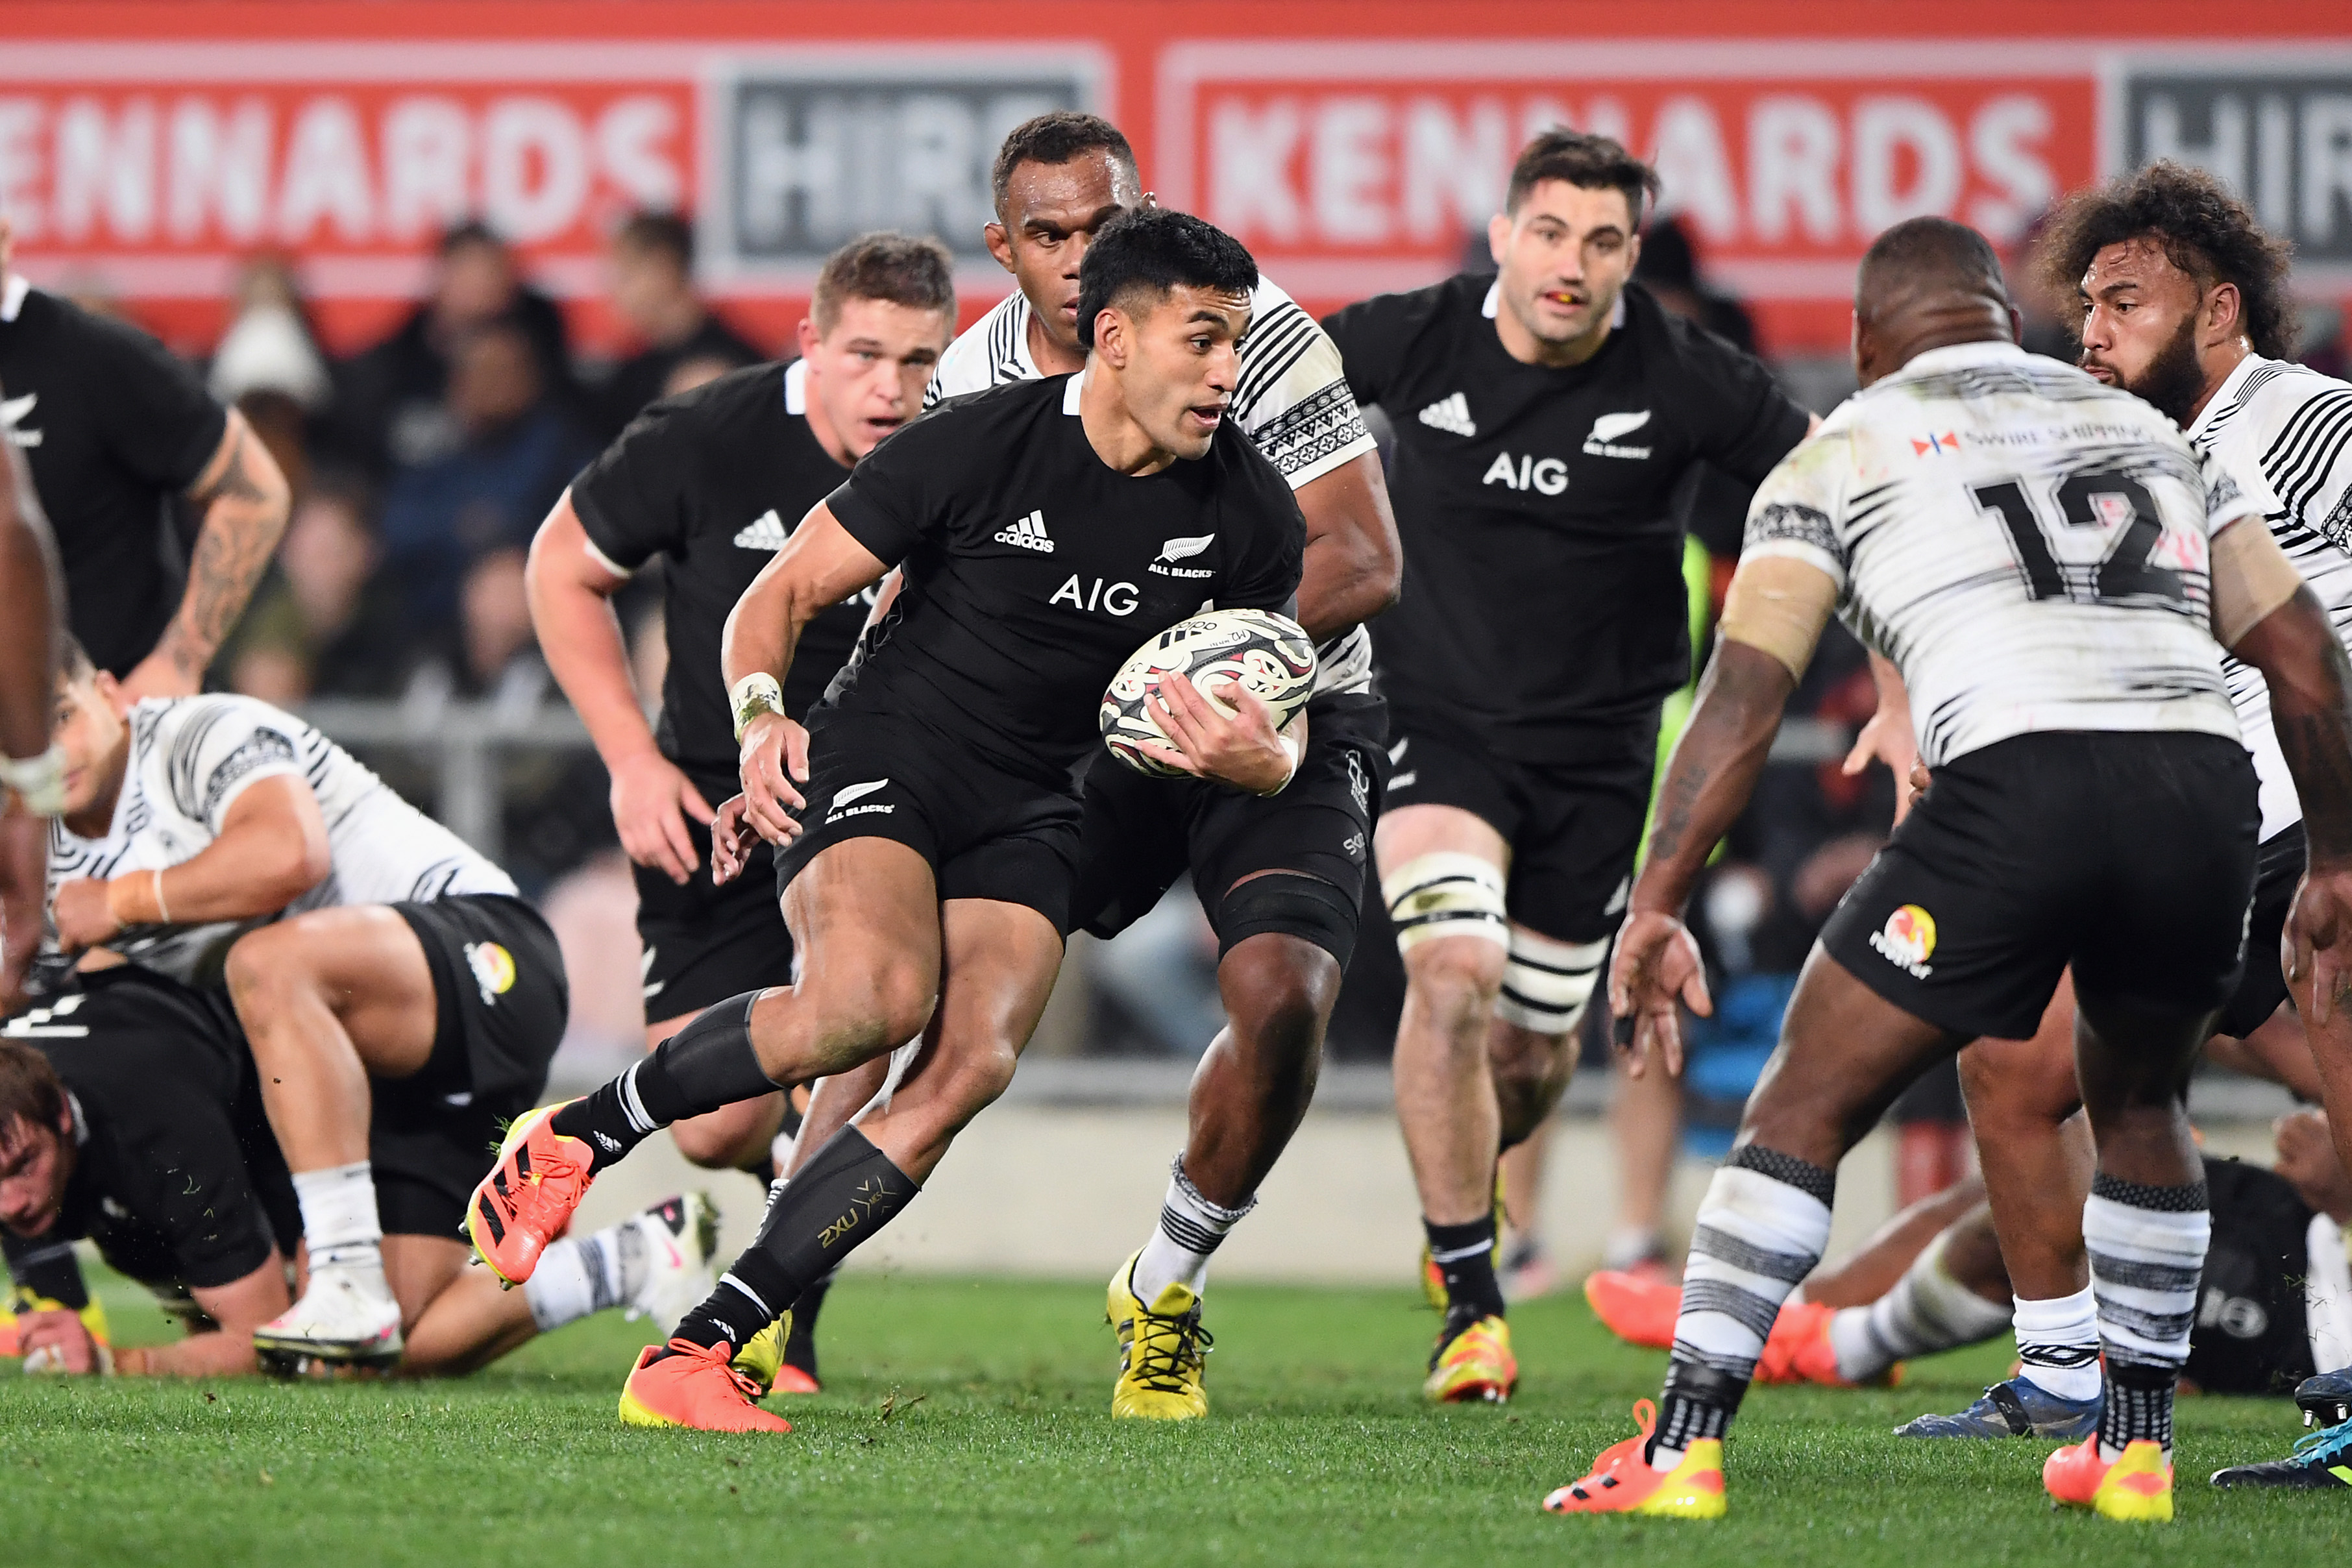 Black Haka New Zealand Rugby. Дункан ди бюнсон регби. Спор о сионе дуглас